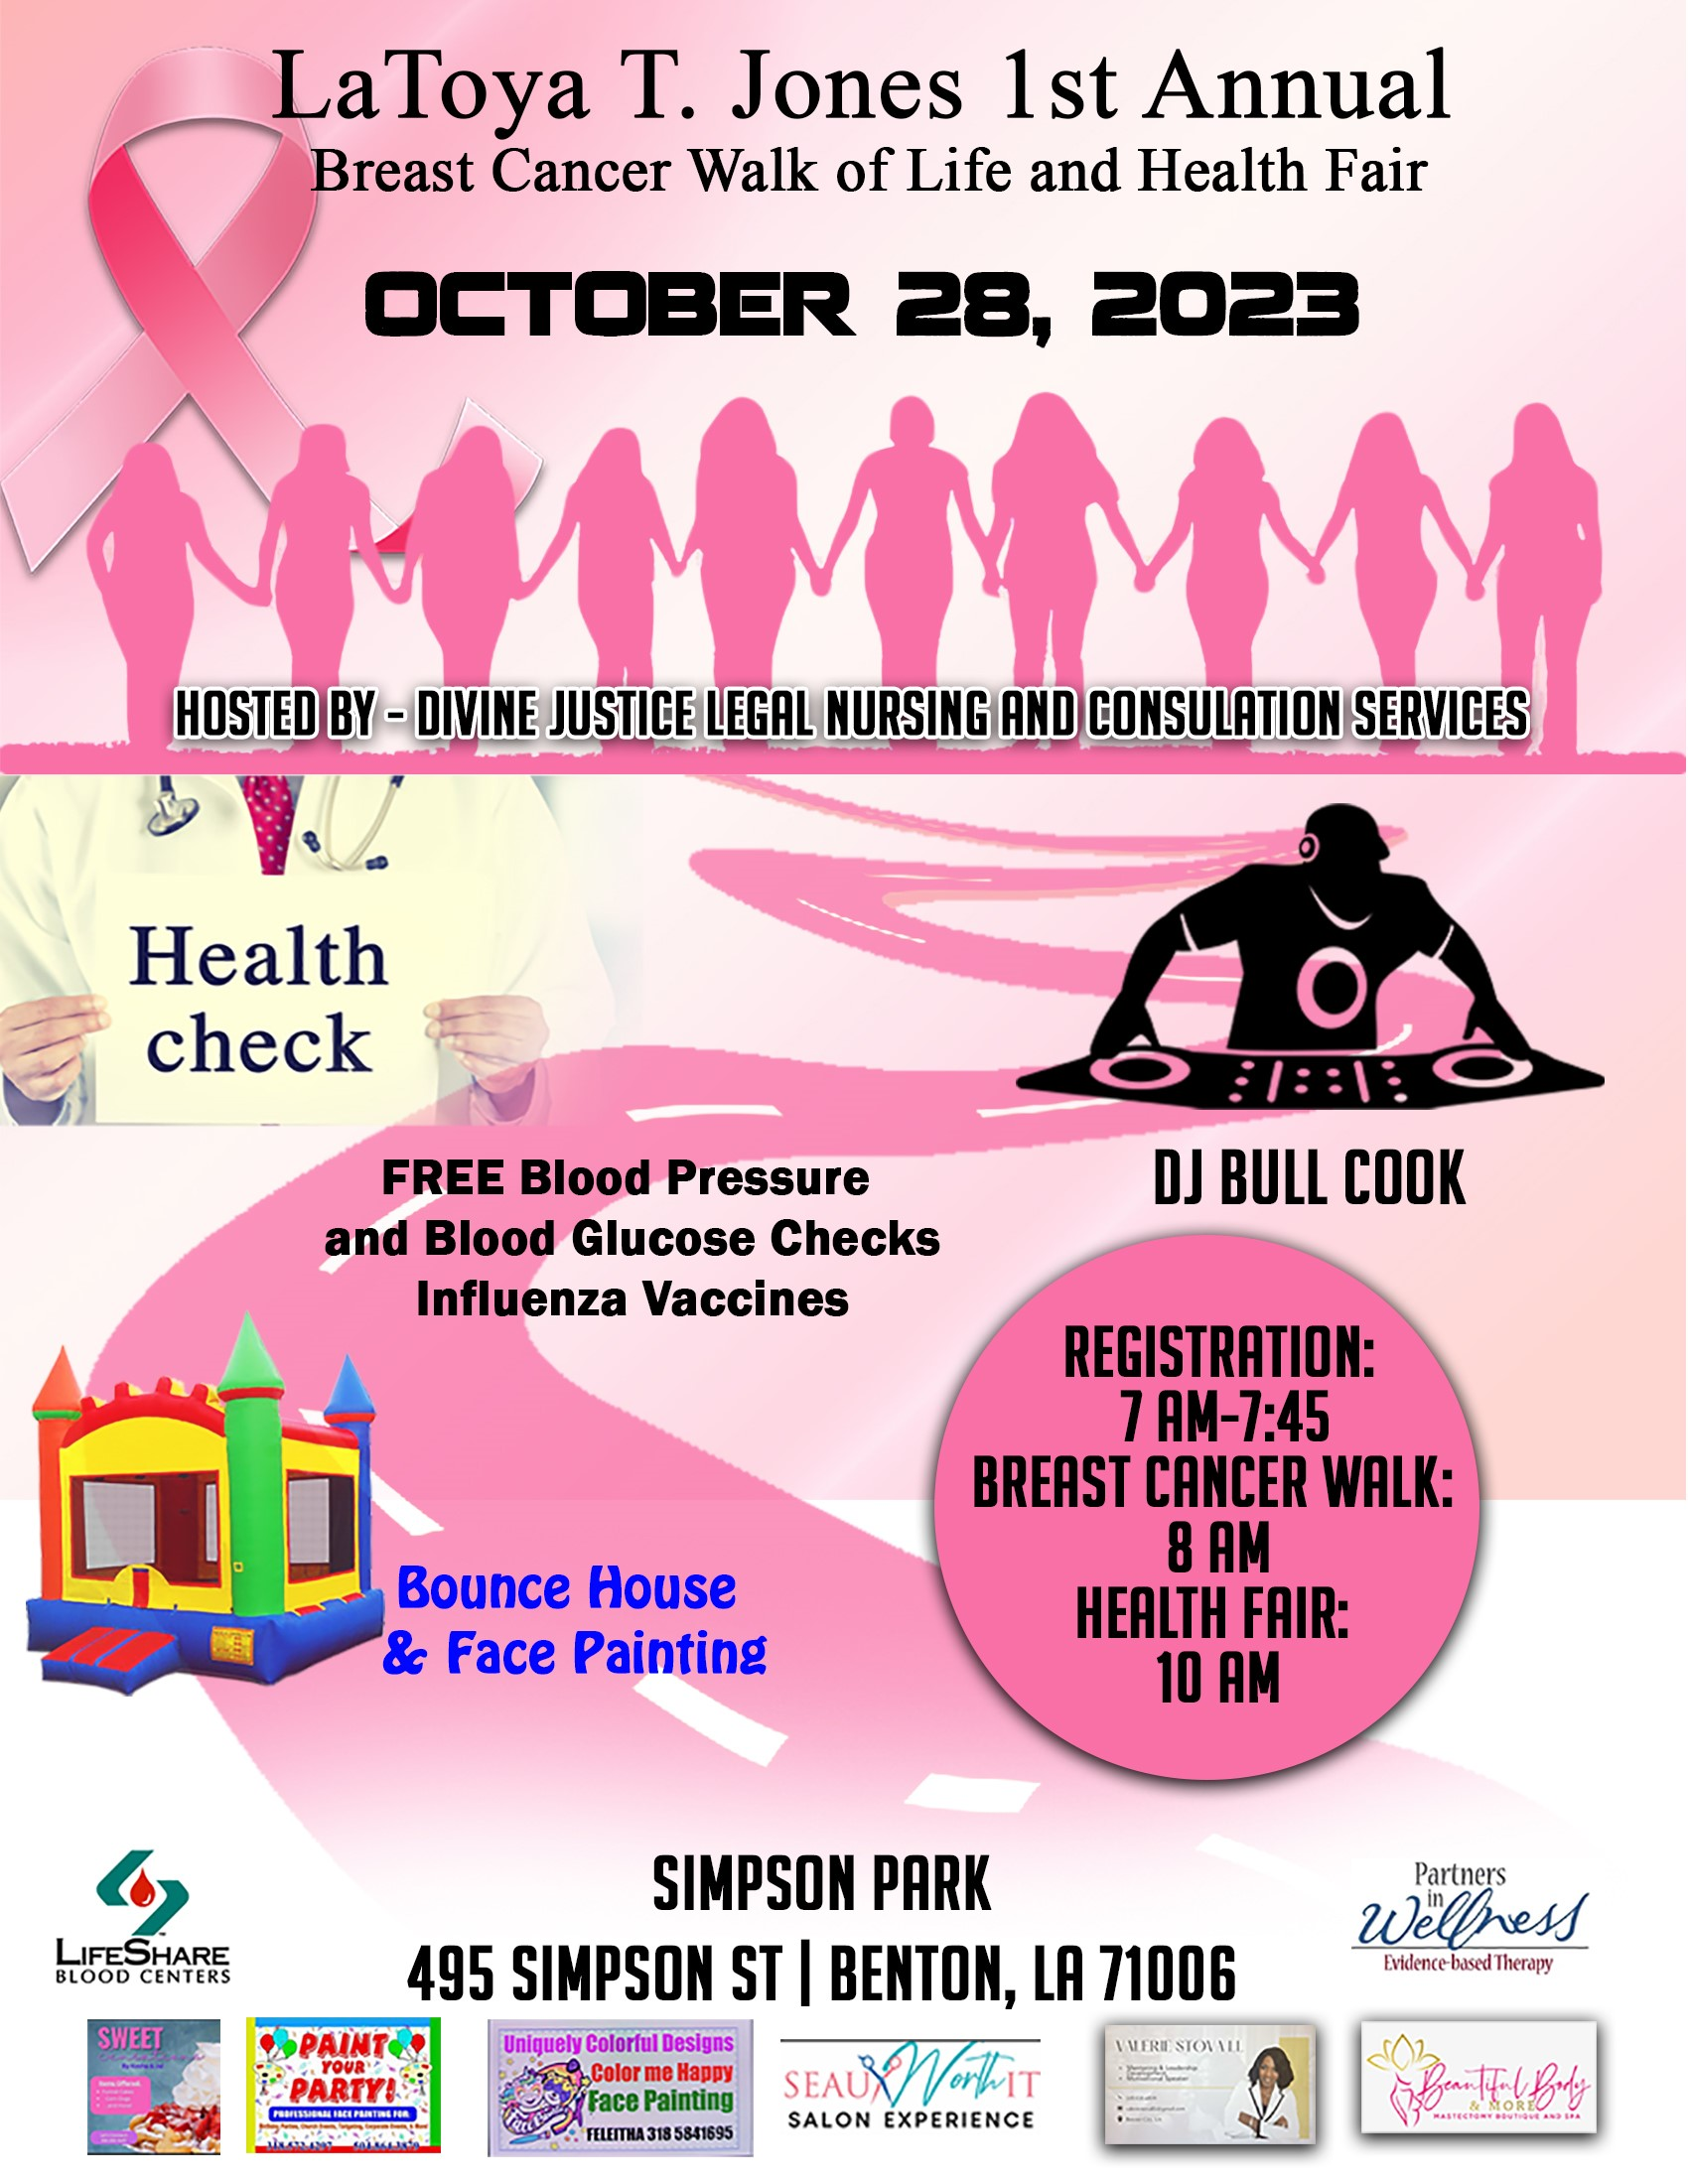 LaToya T. Jones Breast Cancer Walk of Life & Health Fair to take place in  Benton